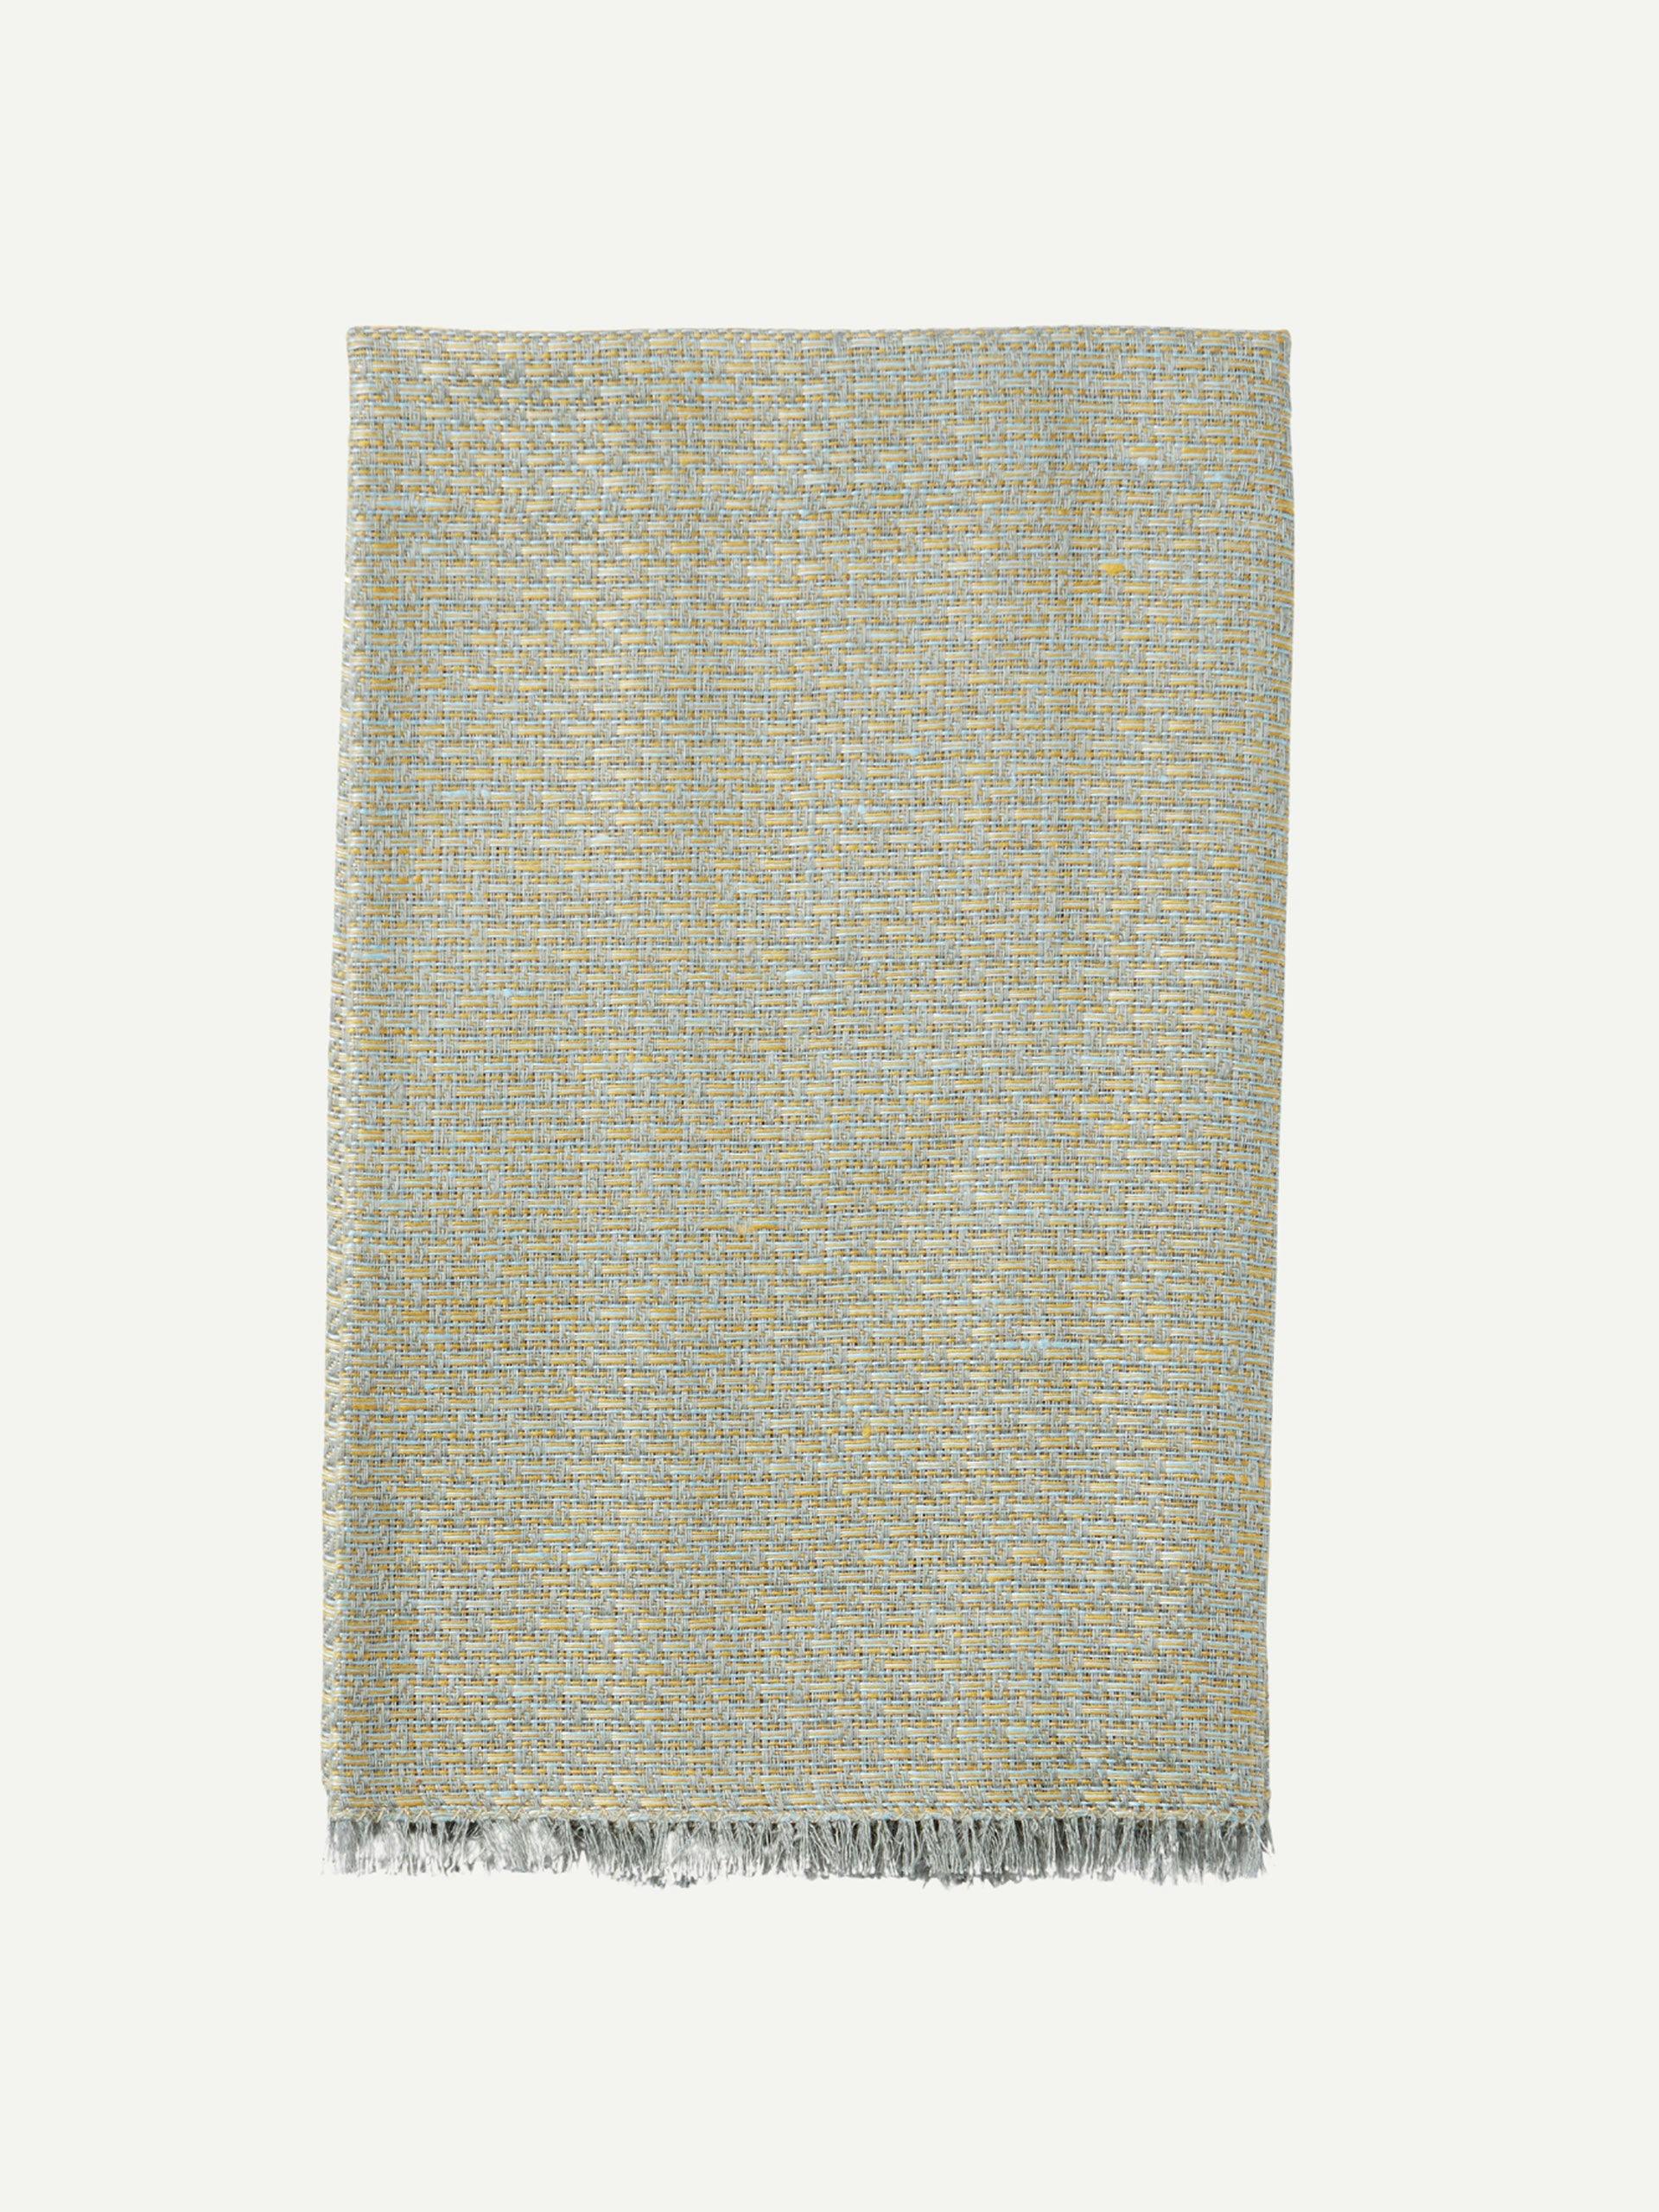 Woven sage Italian linen guest towel